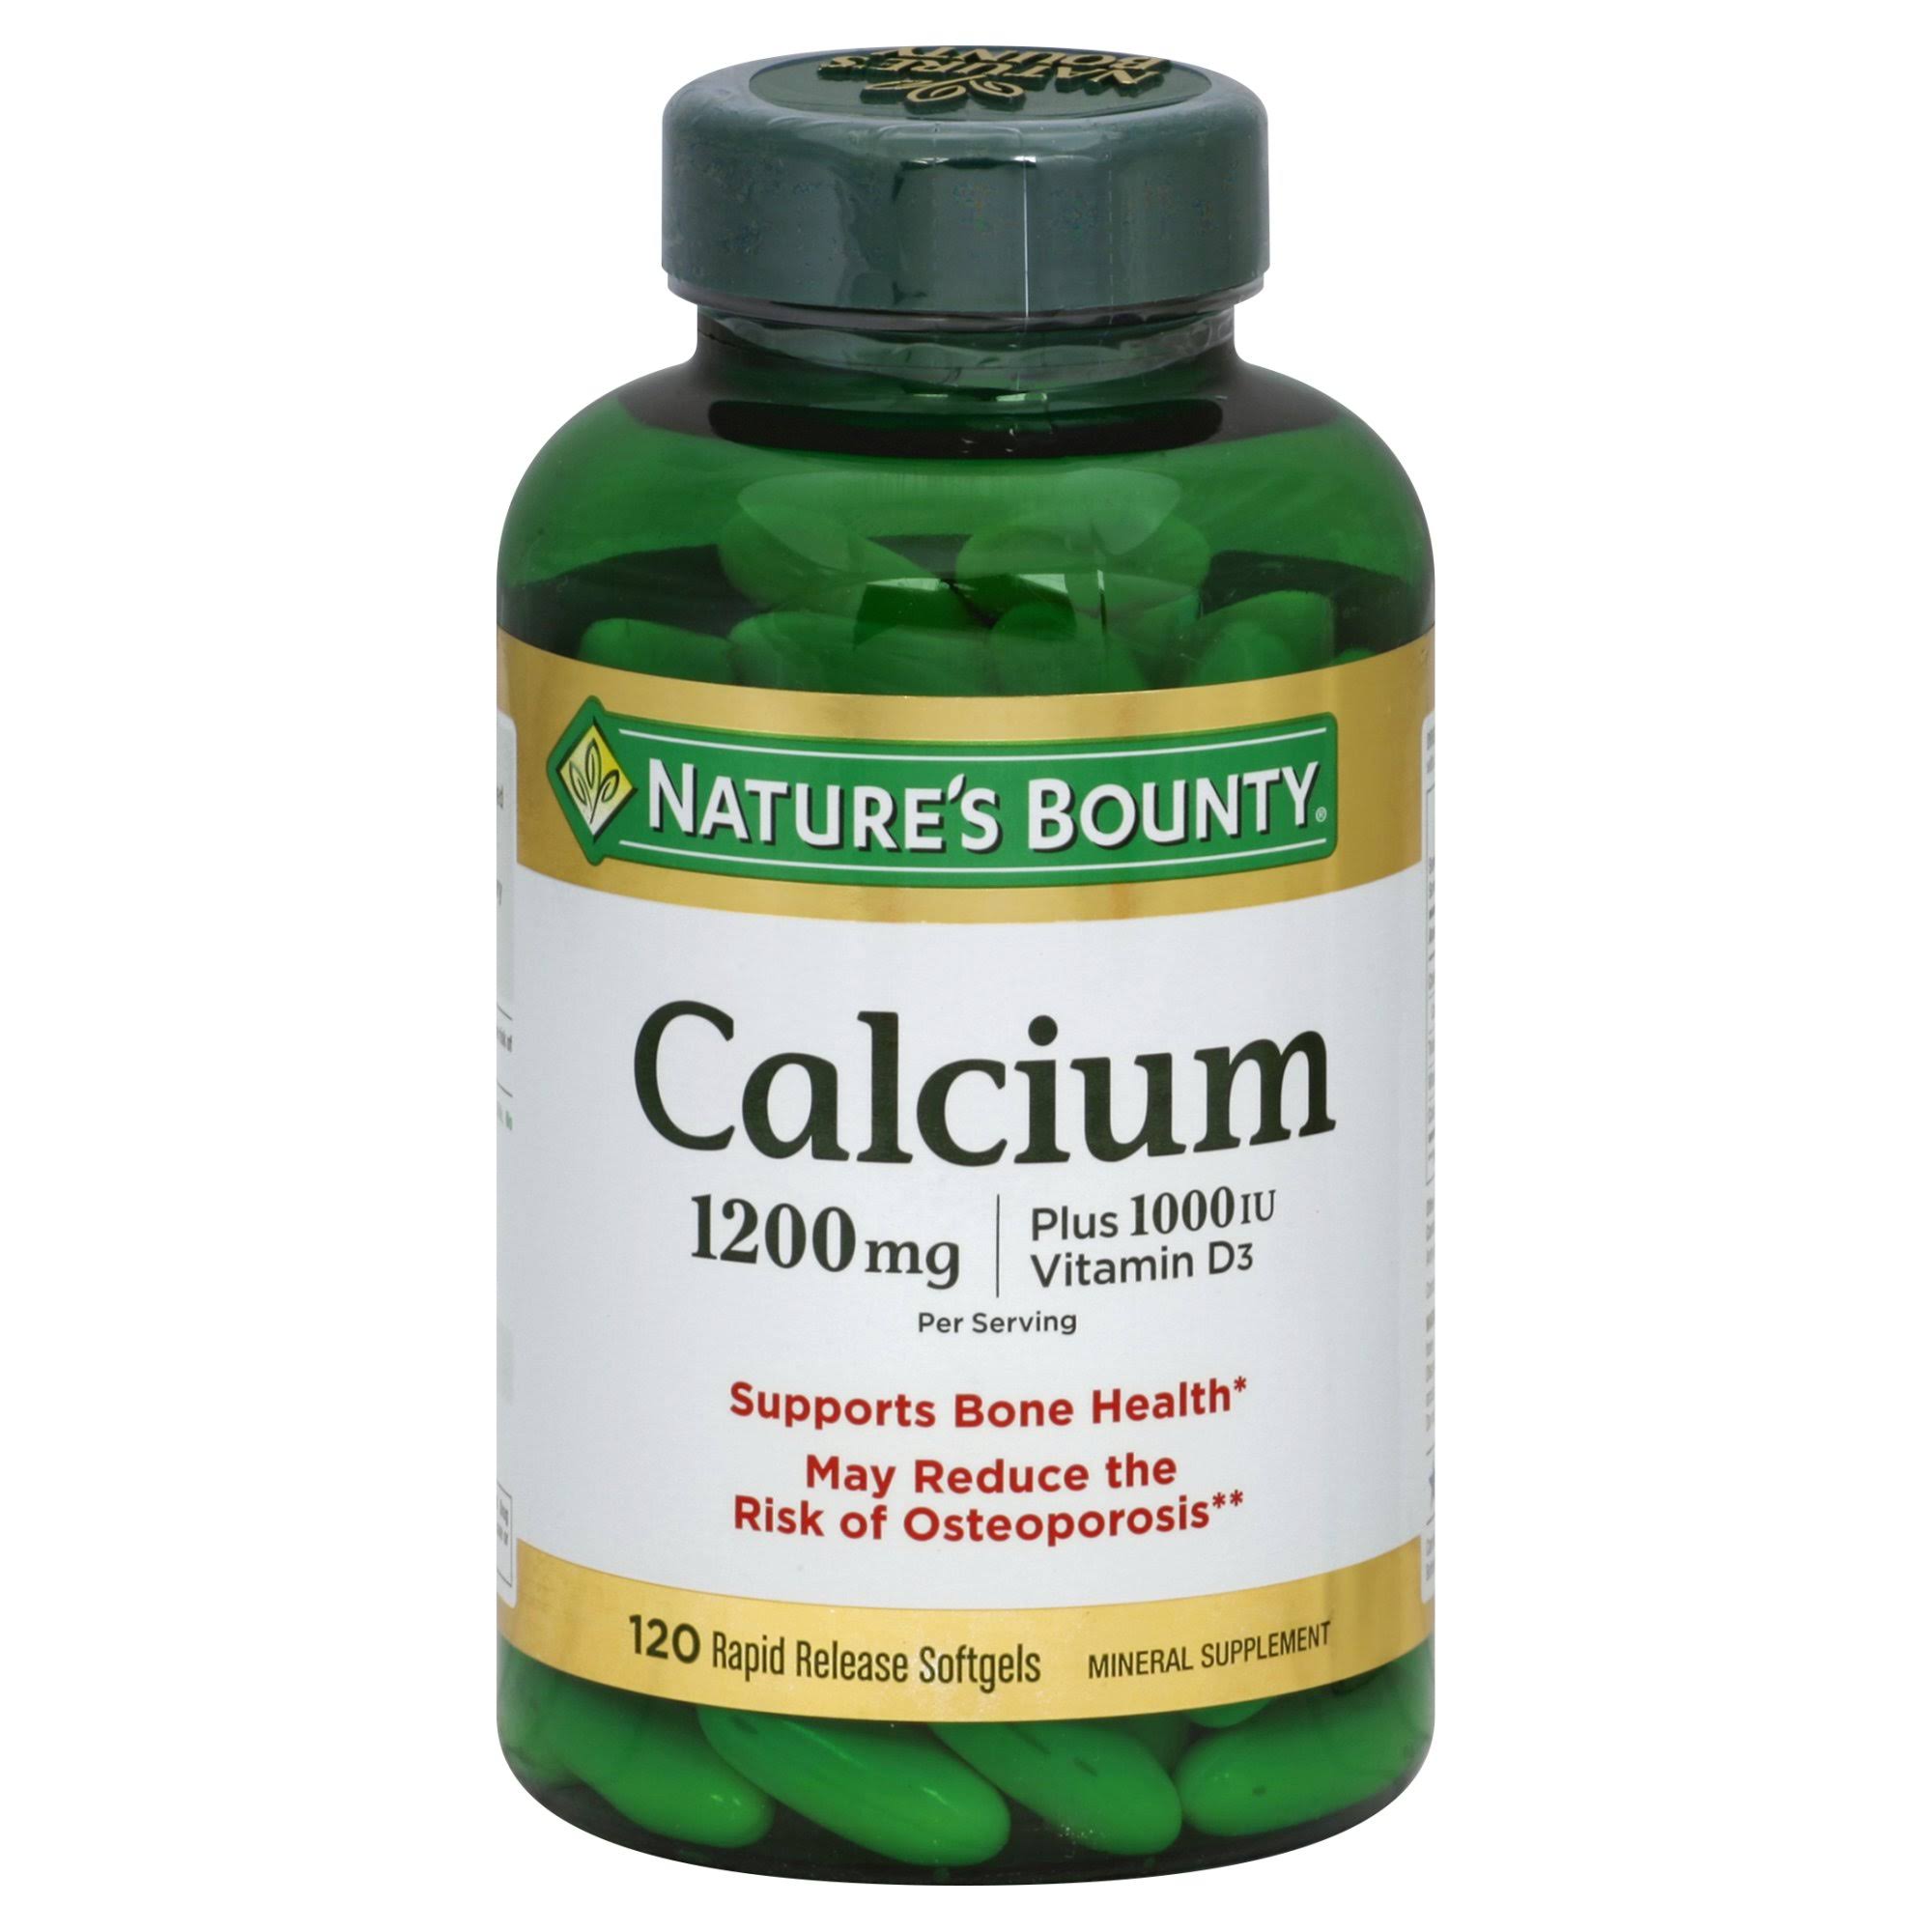 Nature's Bounty Calcium Plus 1000 IU Vitamin D3 Supplement - 120 Rapid Release Softgels, 1200mg